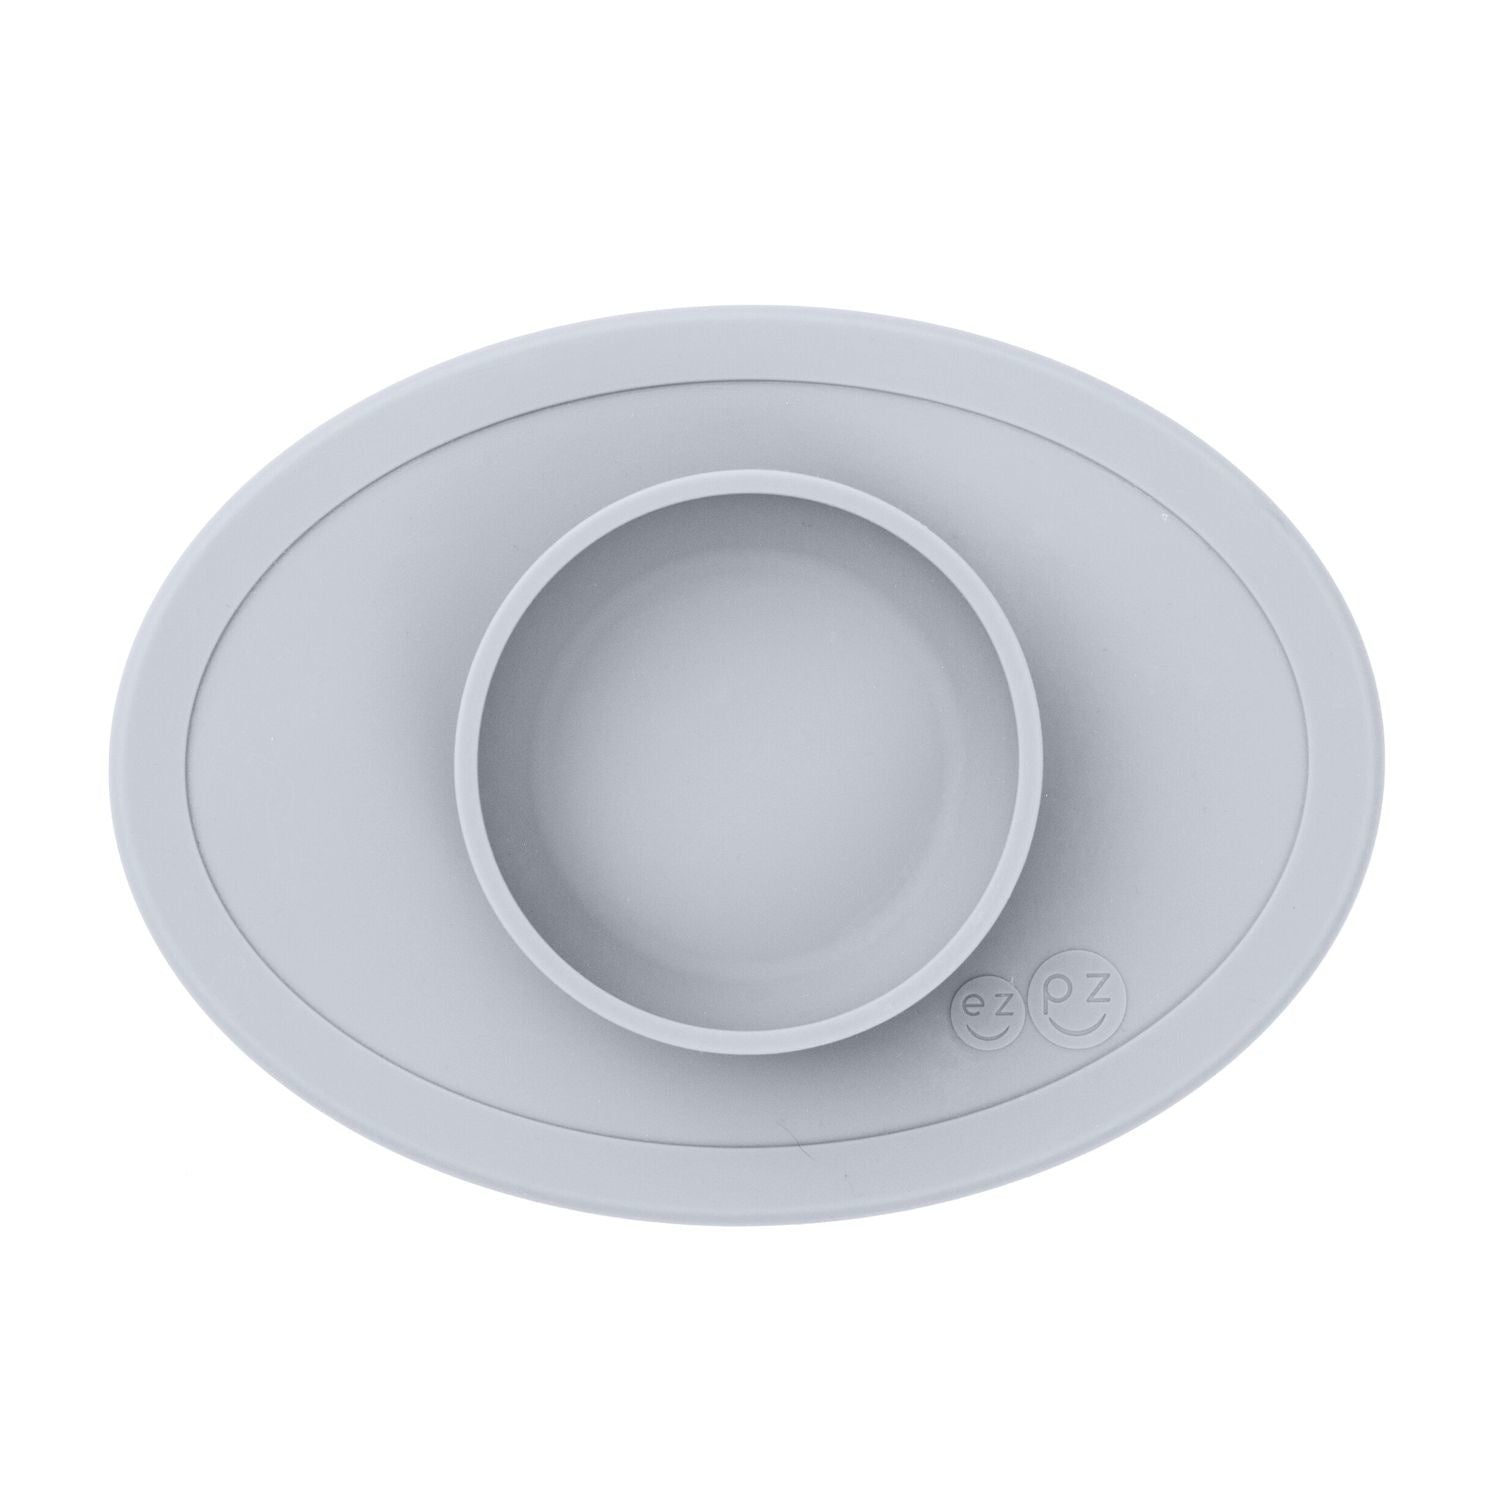 ezpz - Tiny Bowl Silikon Schüssel silber